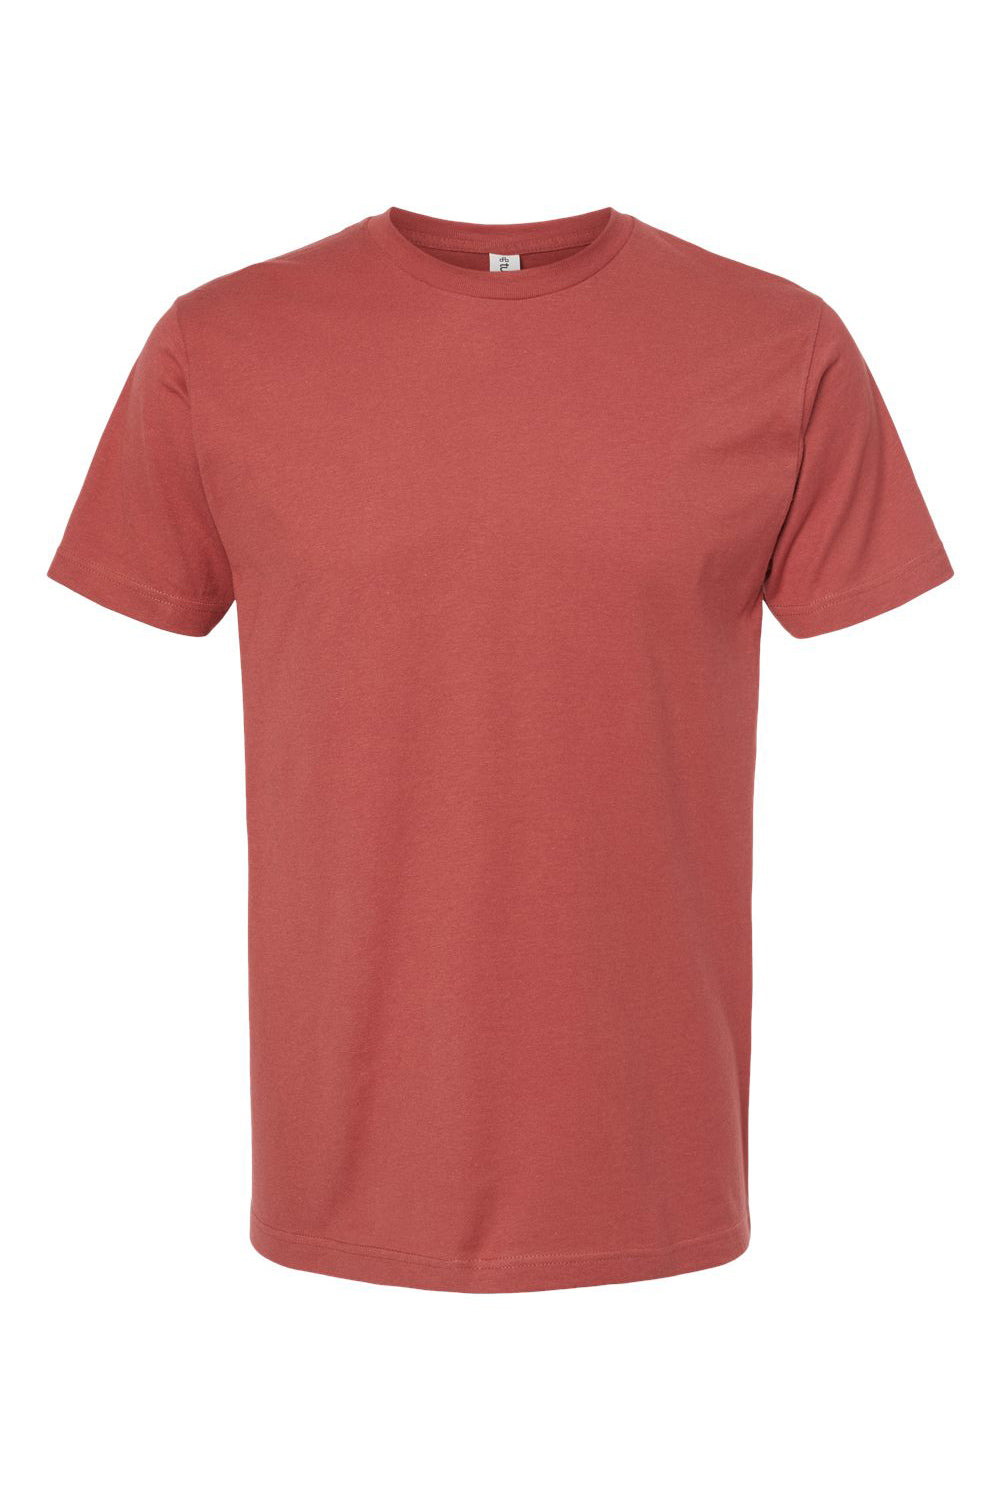 Tultex 202 Mens Fine Jersey Short Sleeve Crewneck T-Shirt Terracotta Red Flat Front